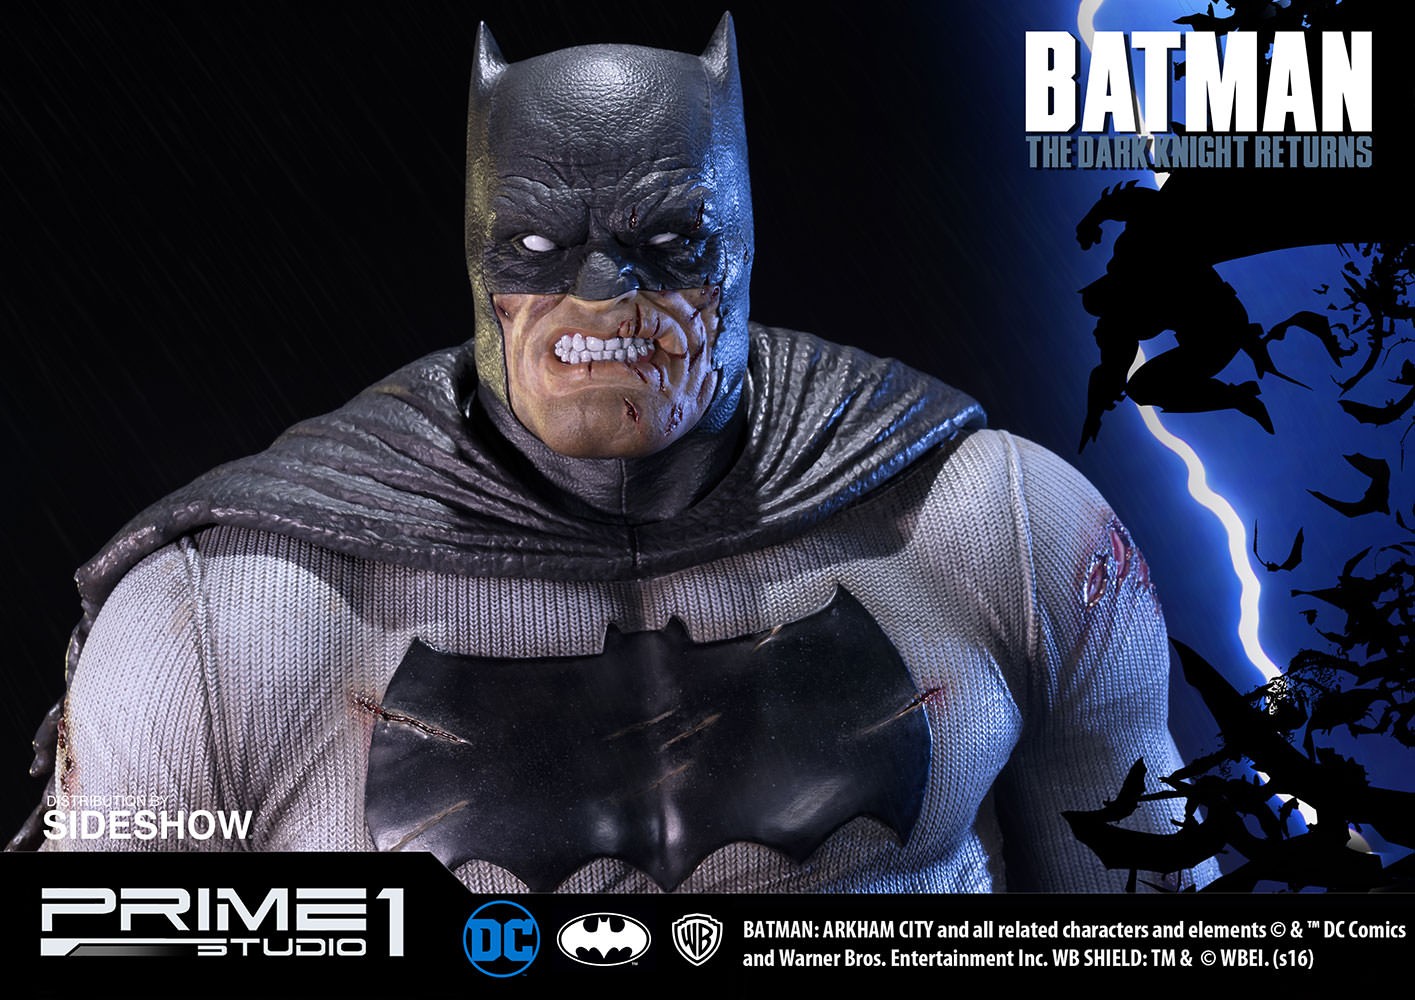 The Dark Knight Returns Batman Exclusive Edition (Prototype Shown) View 16